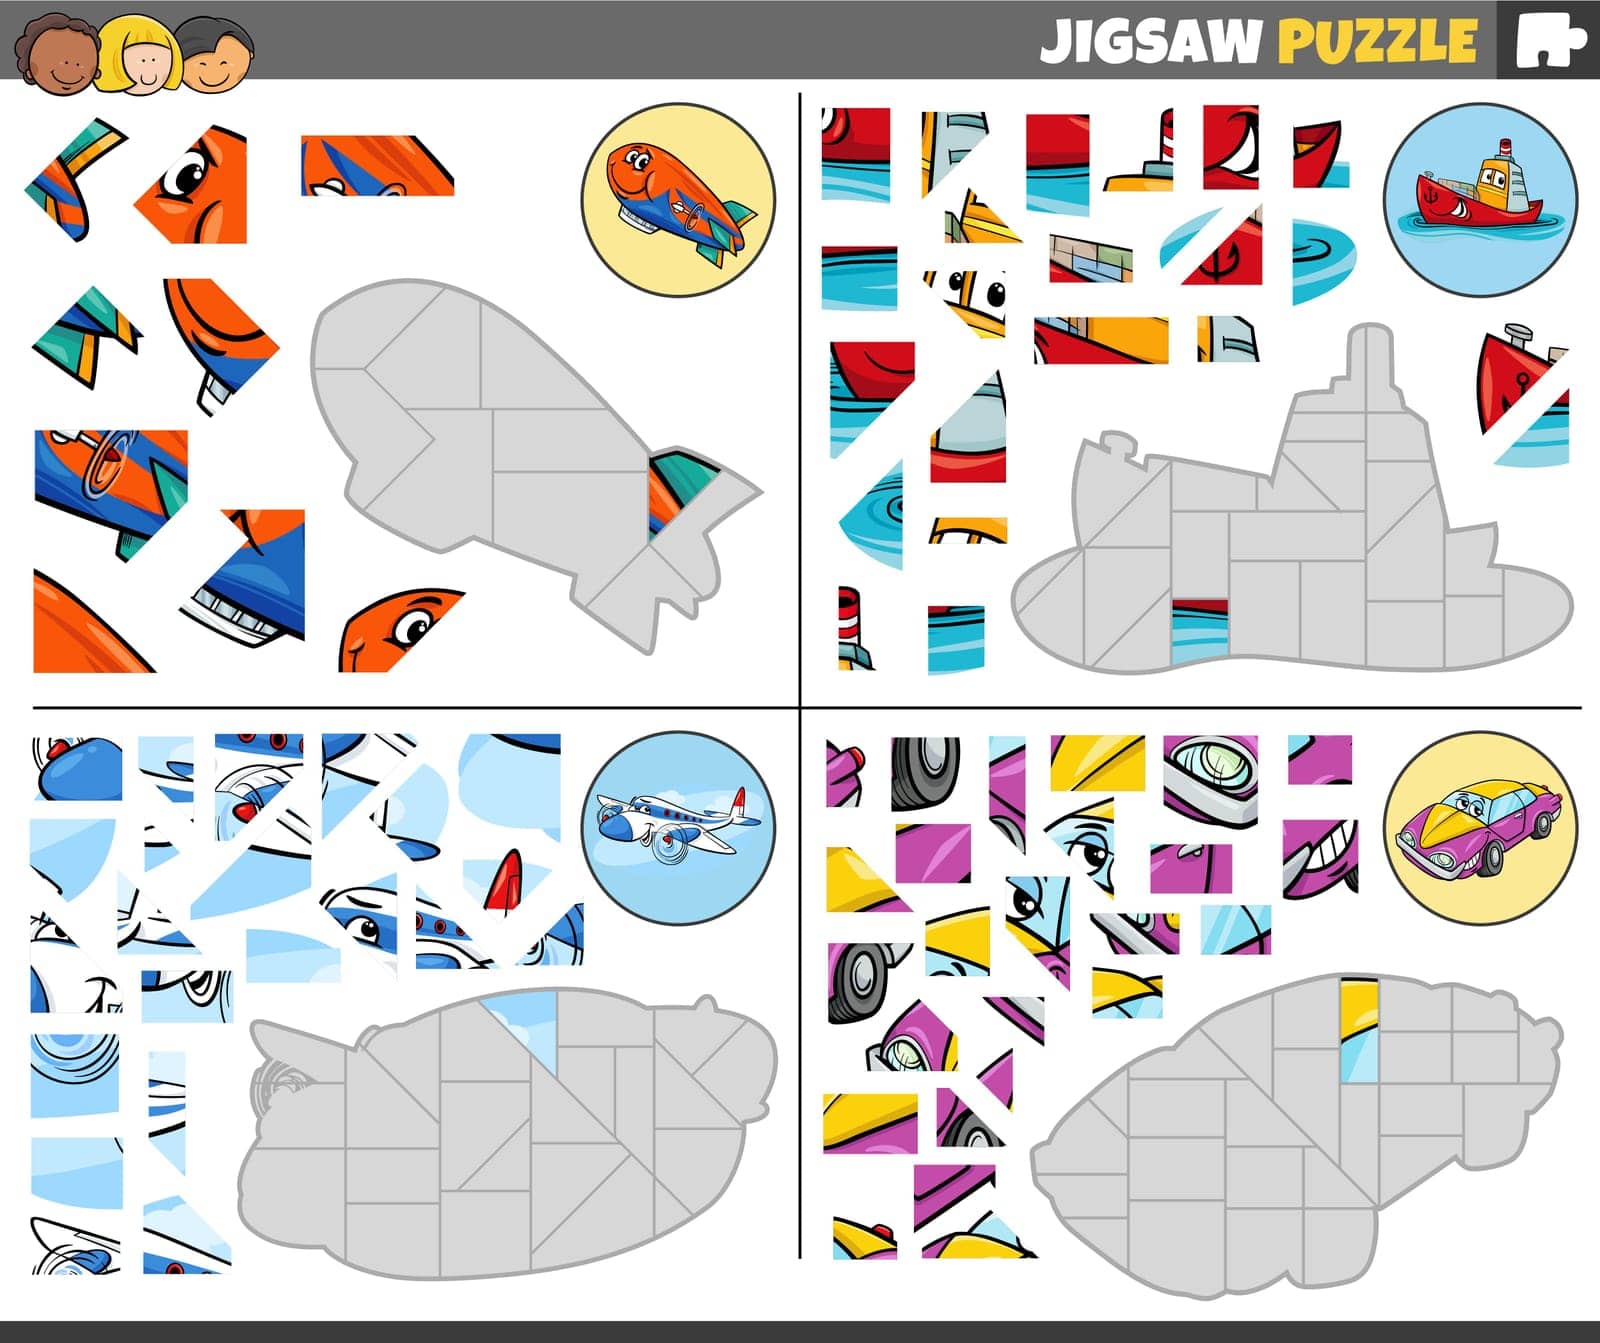 jigsaw puzzle games set with funny cartoon vehicles by izakowski